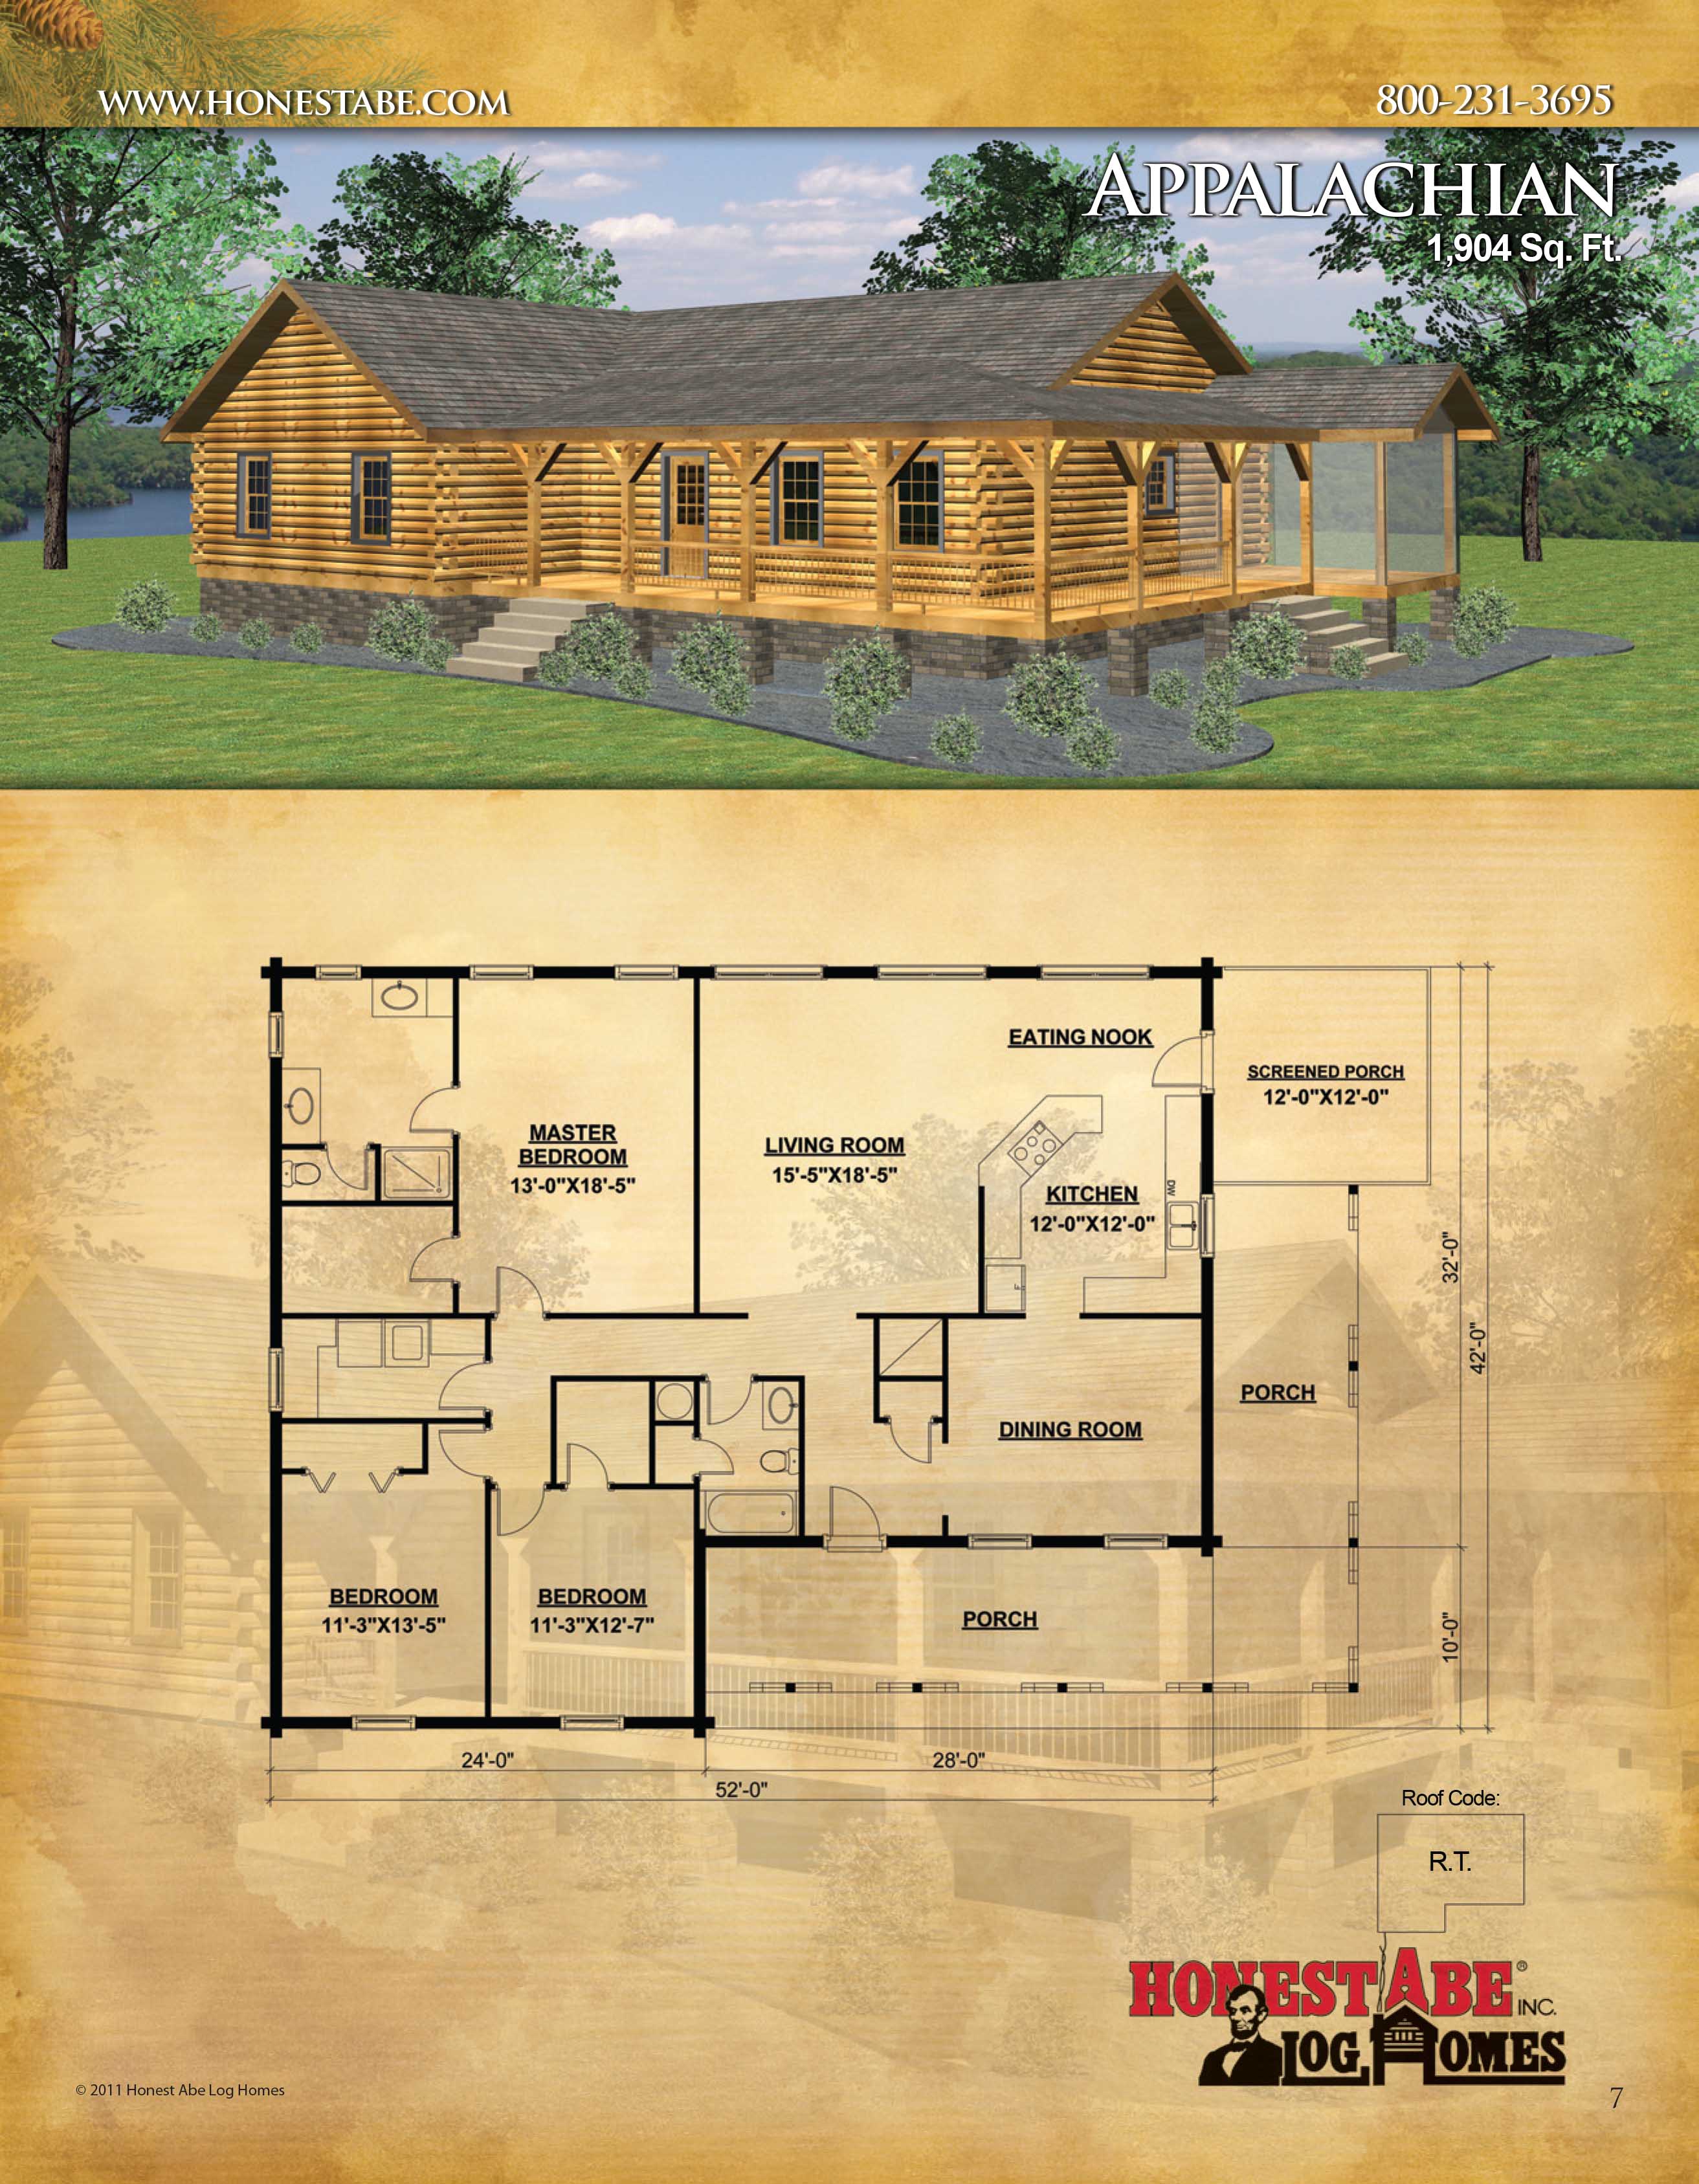 designsbyderwood Handcrafted Log Home Floor Plans